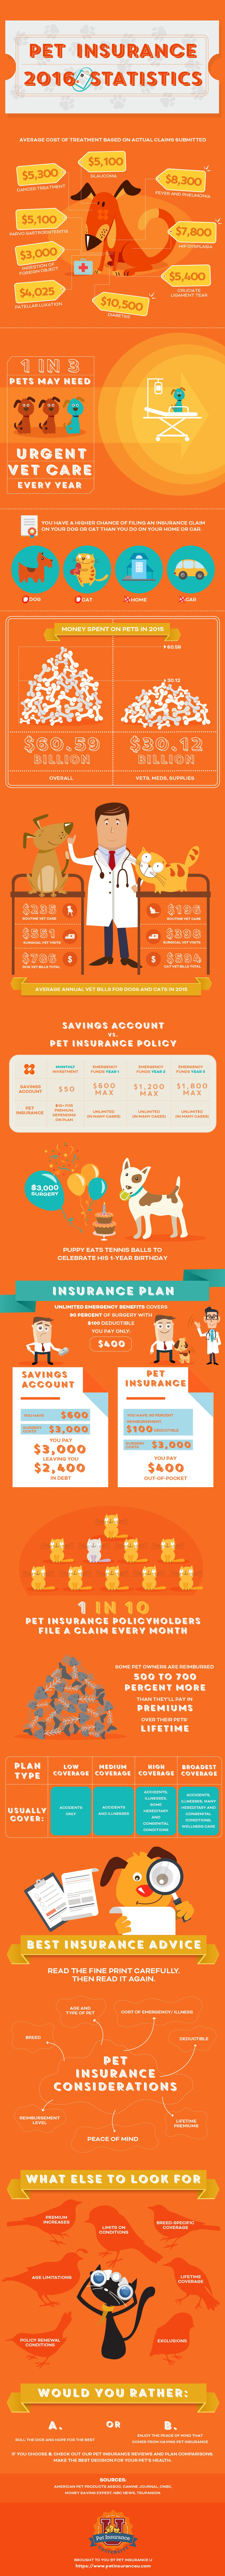 Pet Insurance 2016 Statistics